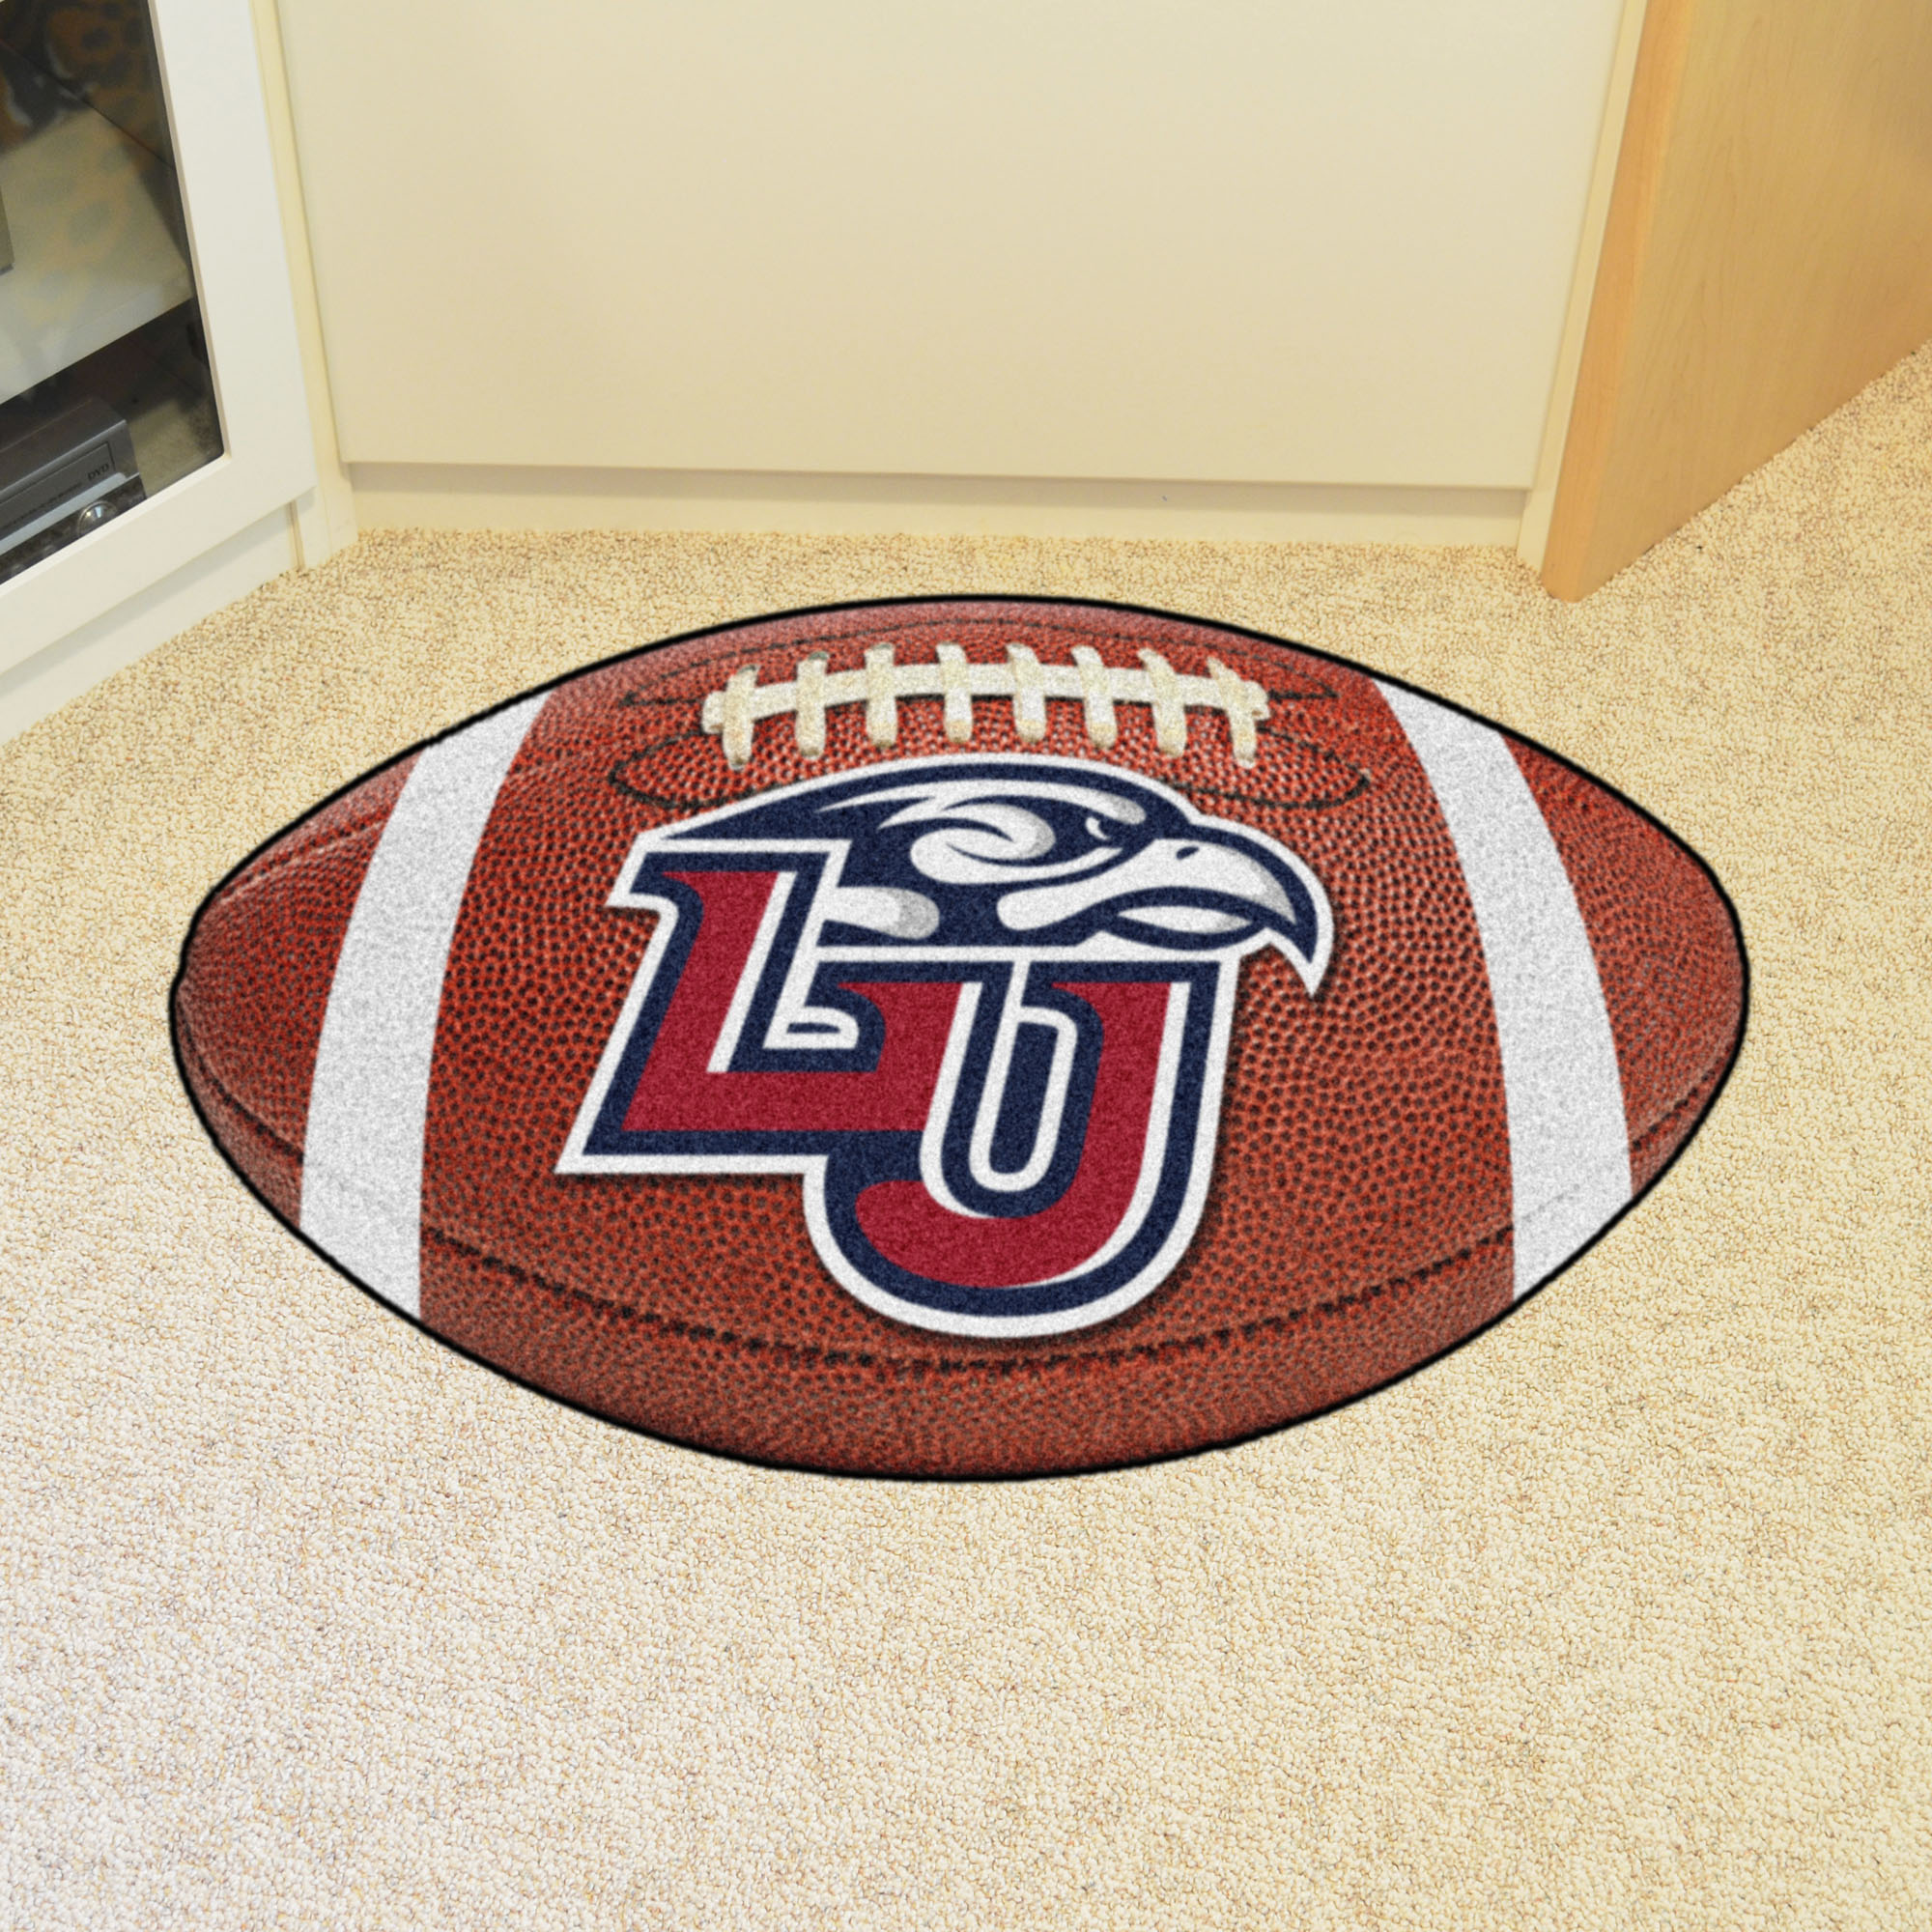 Liberty University Ball Shaped Area Rugs (Ball Shaped Area Rugs: Football)